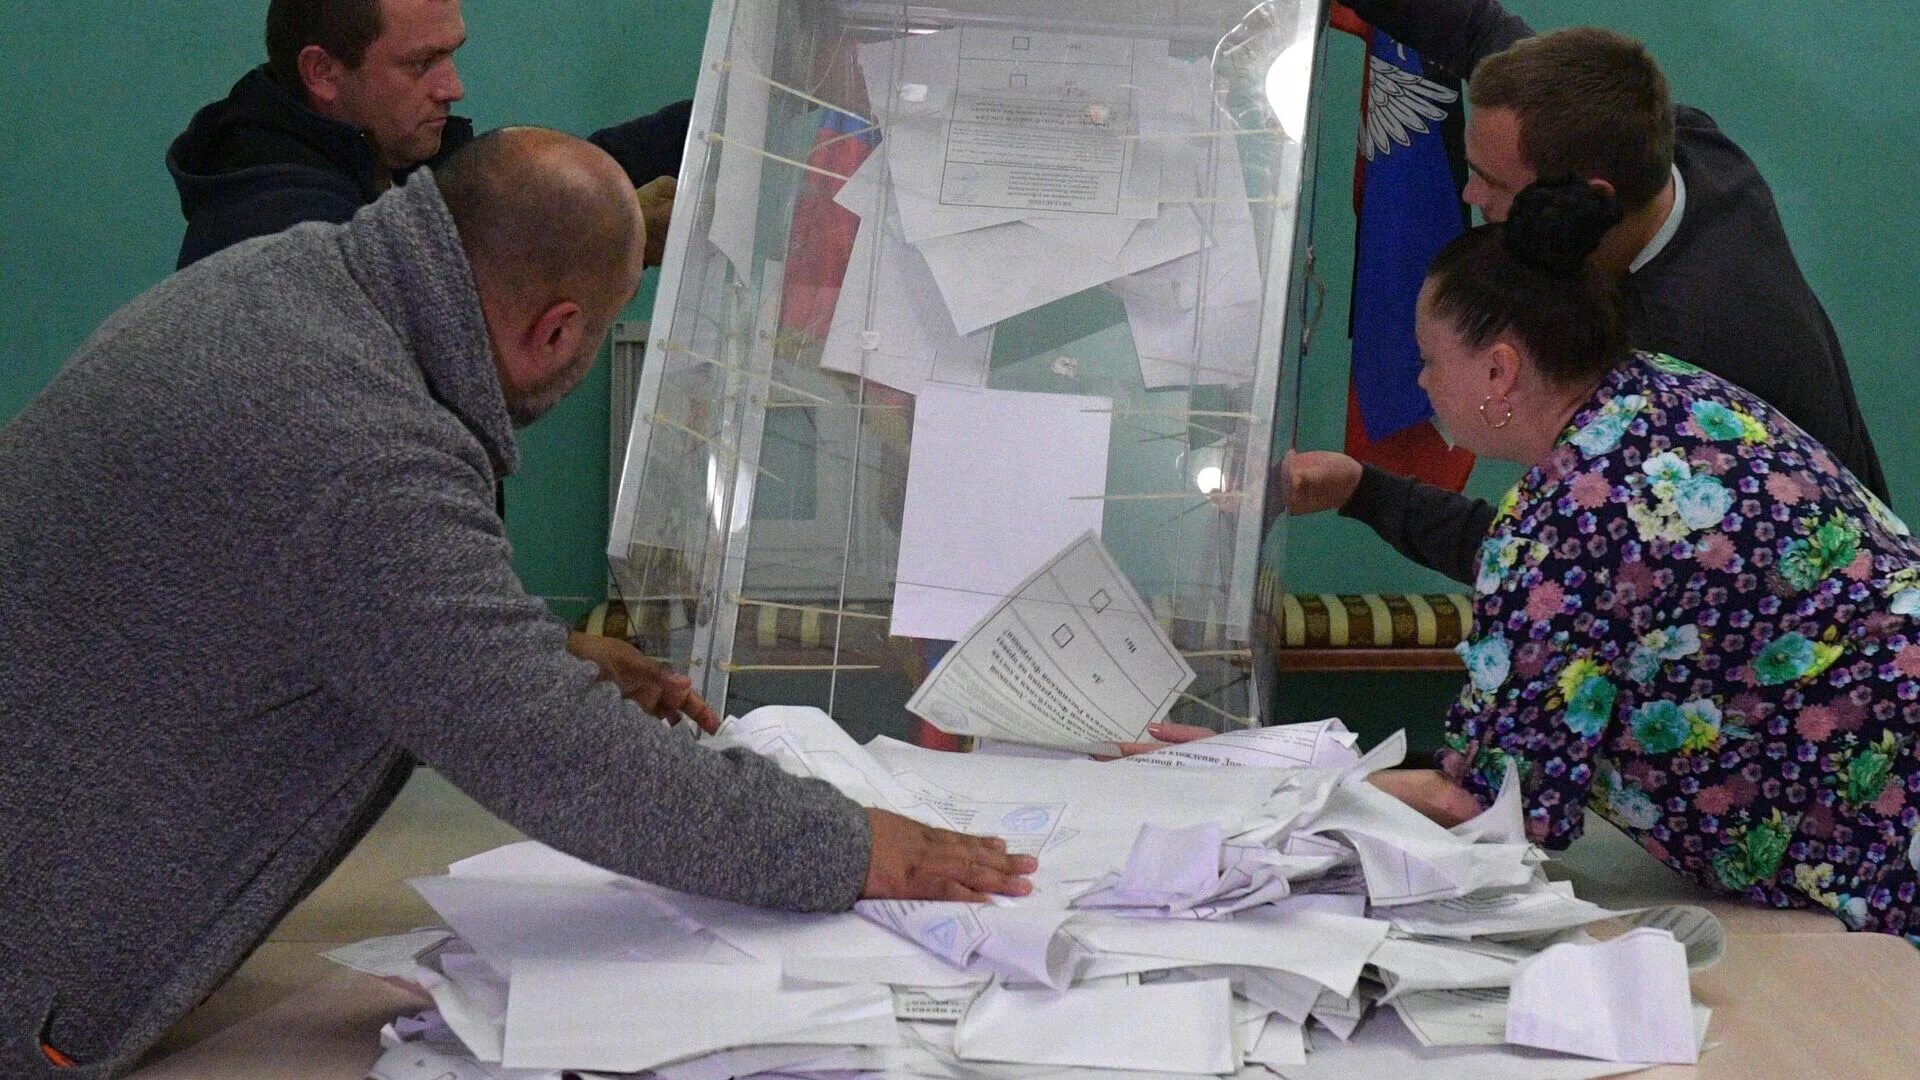 Референдум. Подсчет голосов. Подсчет голосов референдум. Референдум в Запорожской области.